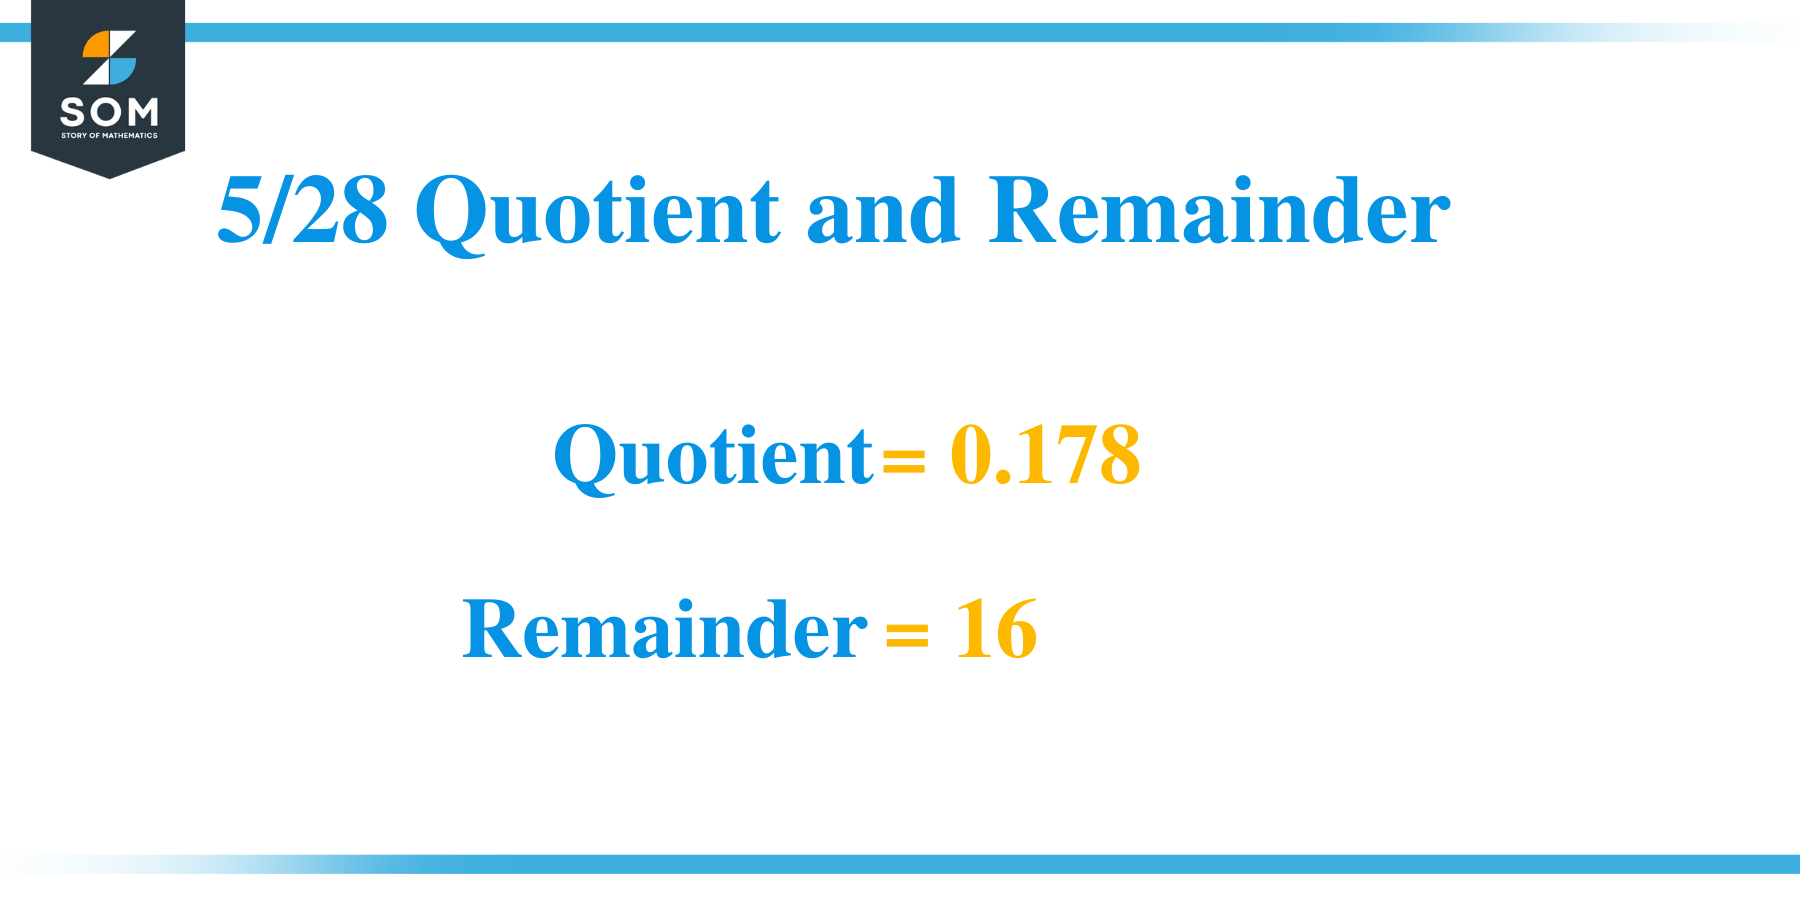 5_28 Quotient and Remainder